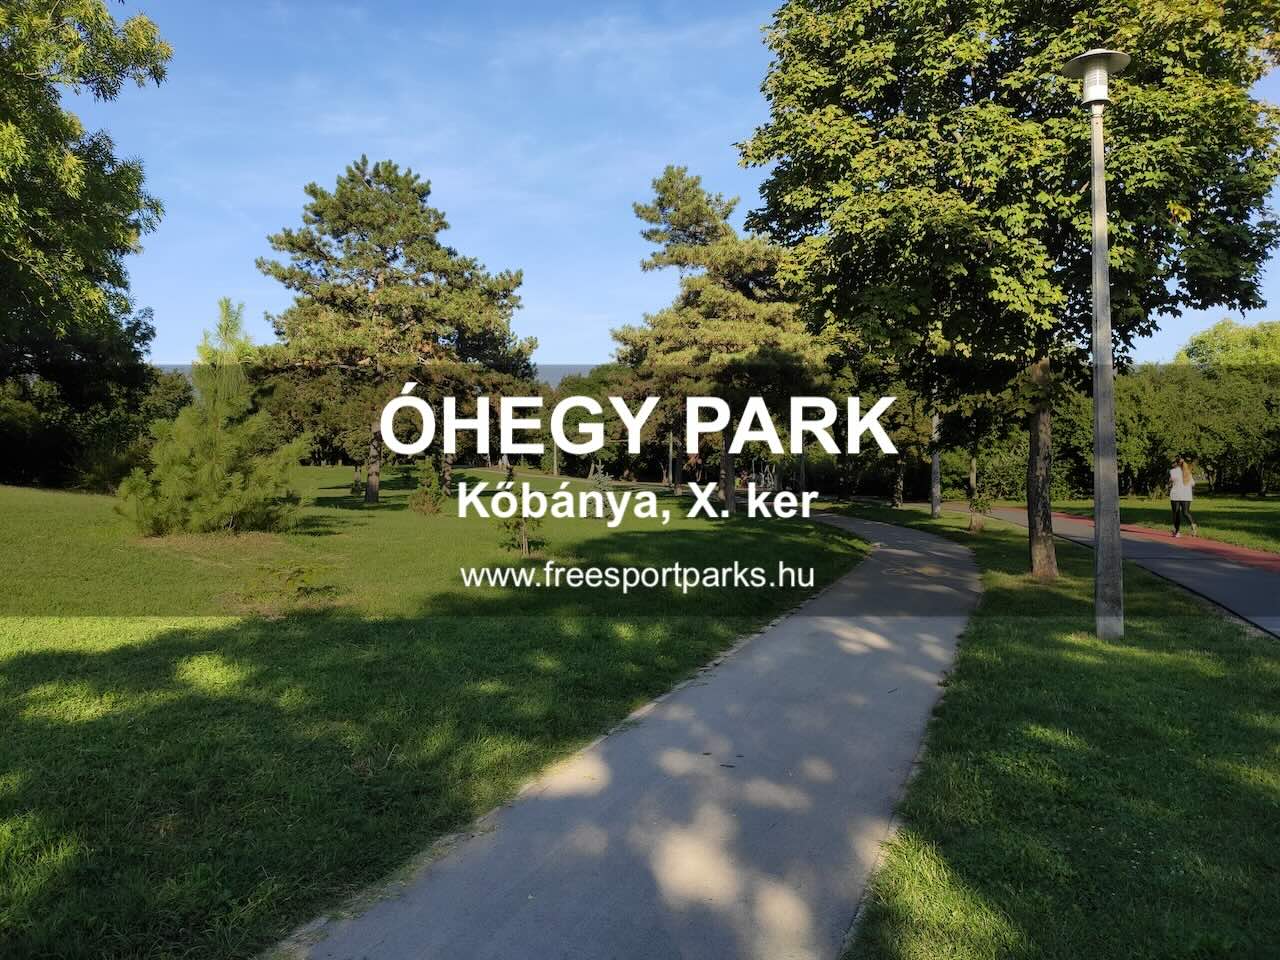 Óhegy Park, Kőbánya - Free Sport Parks blog